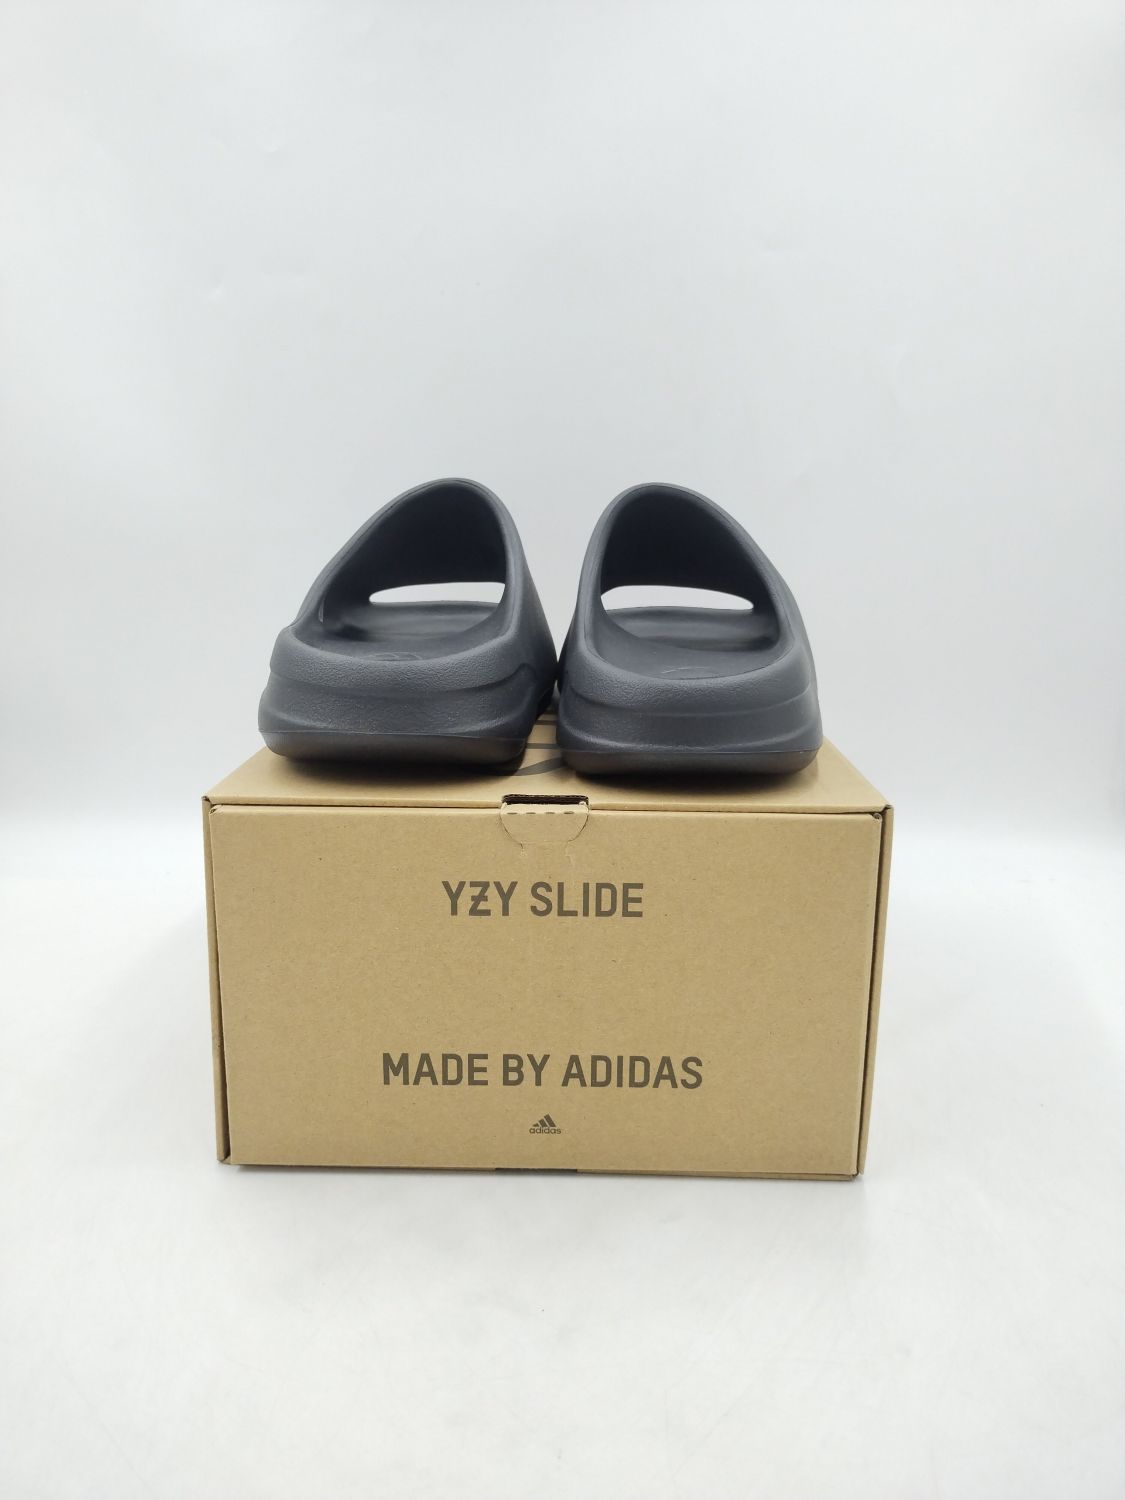 15371 - Adidas Yeezy Slide Onyx | Item Details - AfterMarket